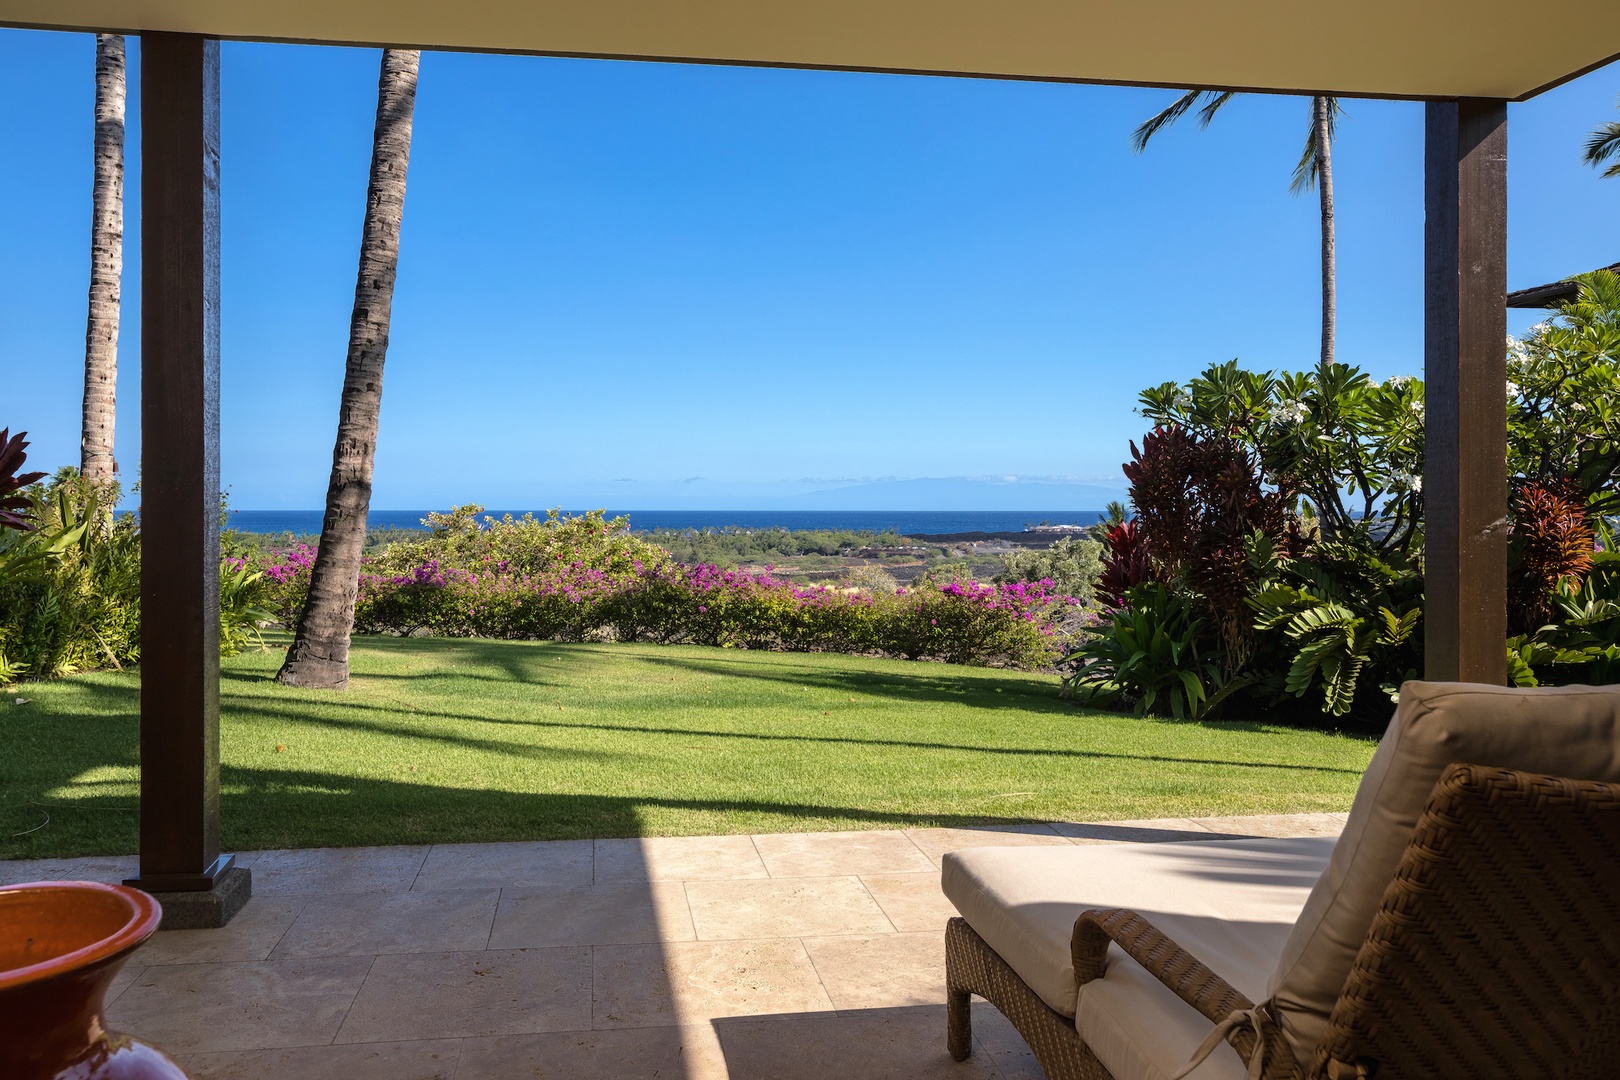 Kailua Kona Vacation Rentals, 2BD Hali'ipua Villa (108) at Four Seasons Resort at Hualalai - Den with private lanai offering a panoramic ocean view.